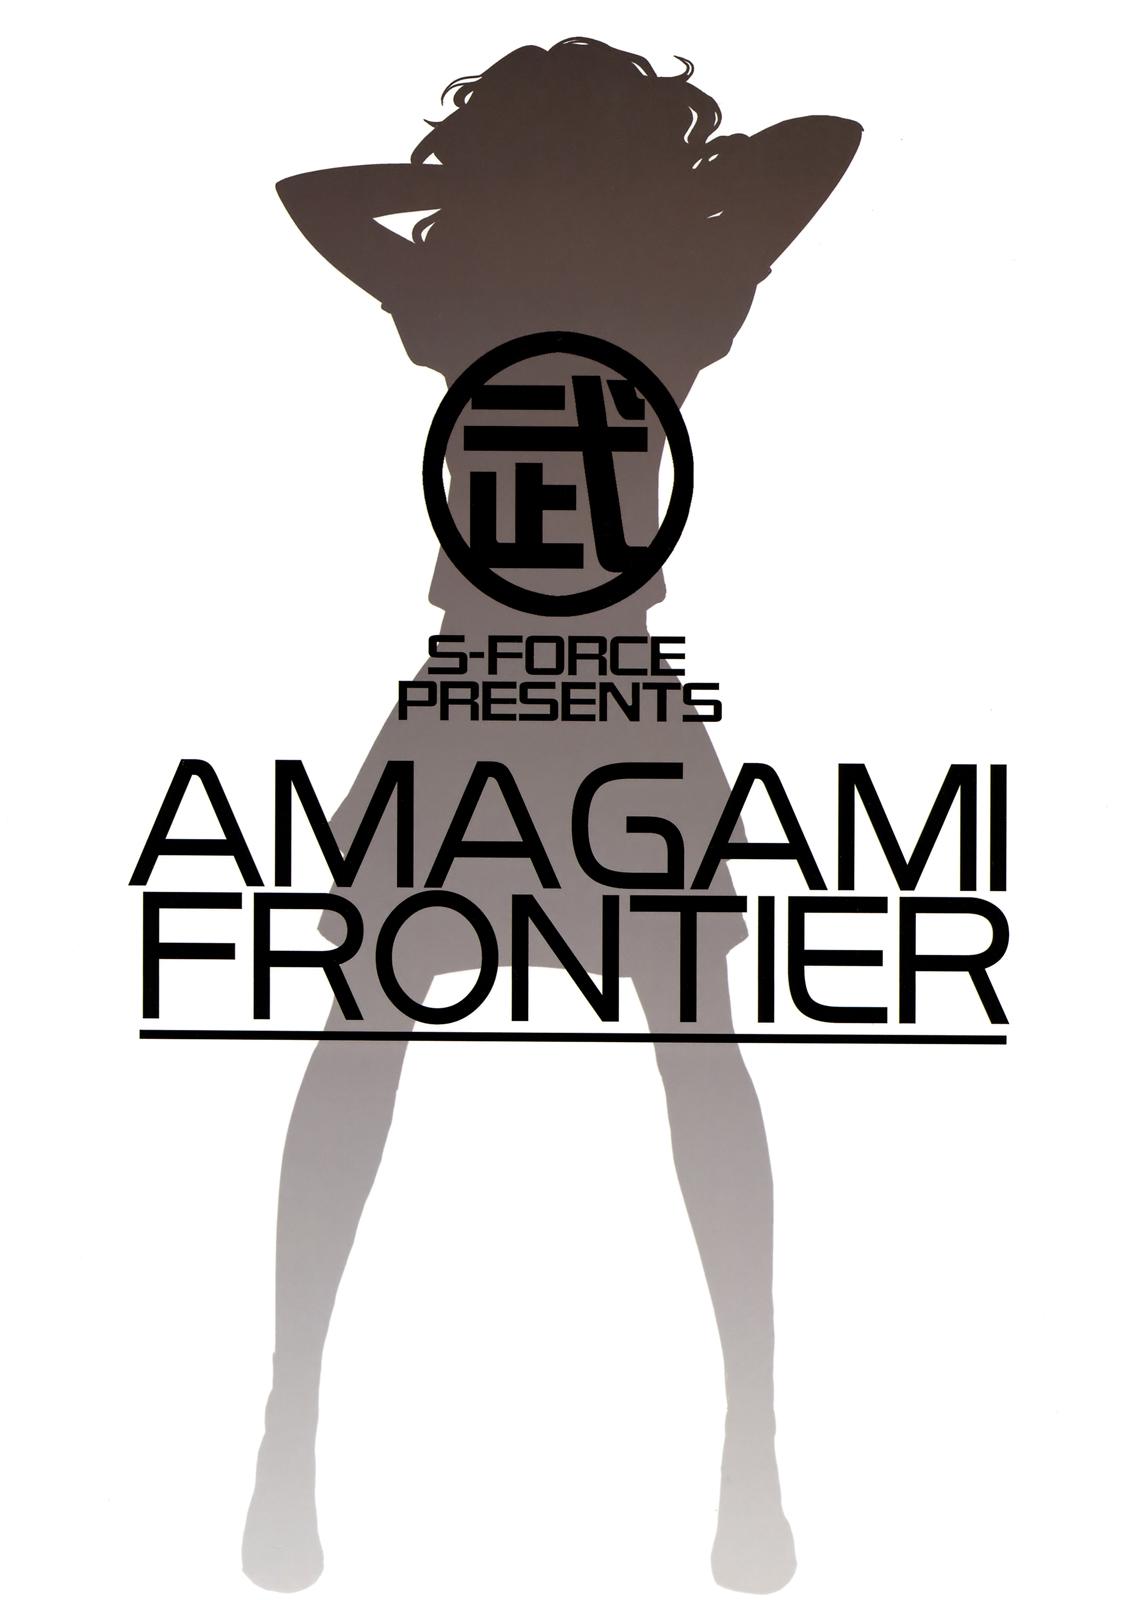 AMAGAMI FRONTIER 1